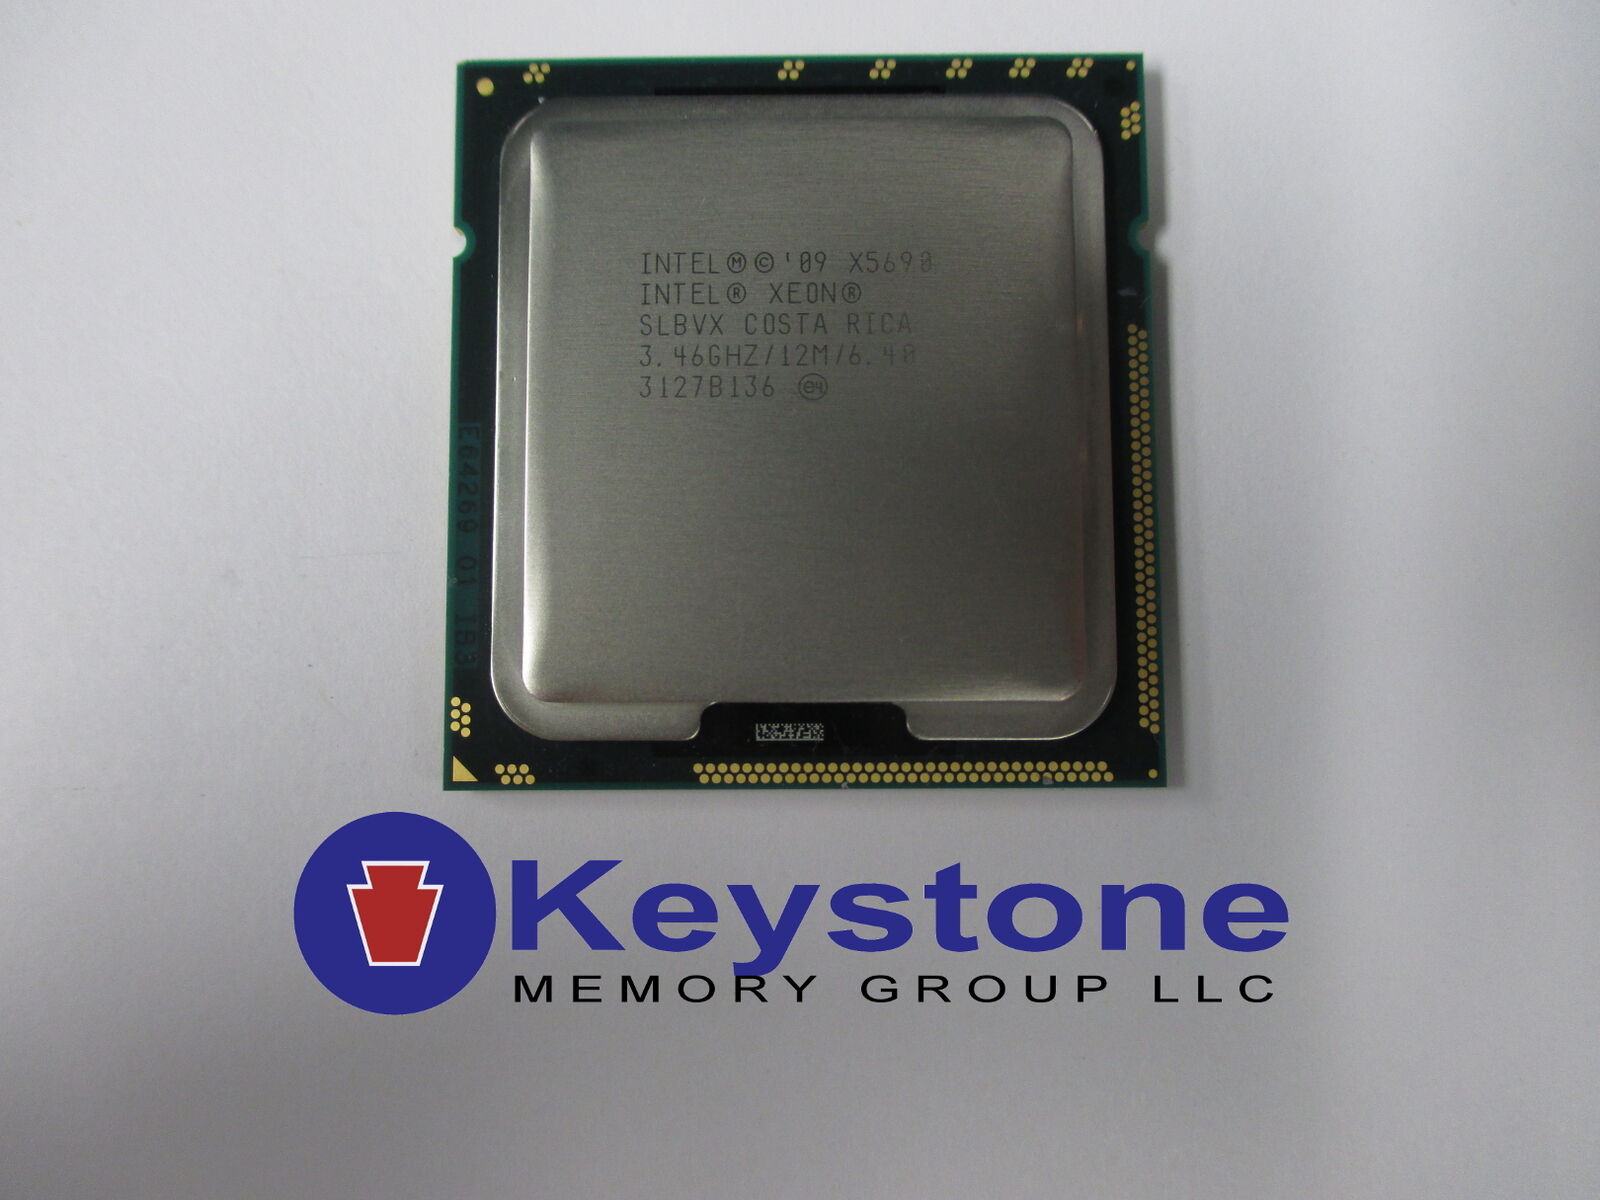 Intel Xeon X5690 SLBVX 3.46GHZ 12MB 6.4GT/s LGA 1366/Socket B Six-Core CPU *km